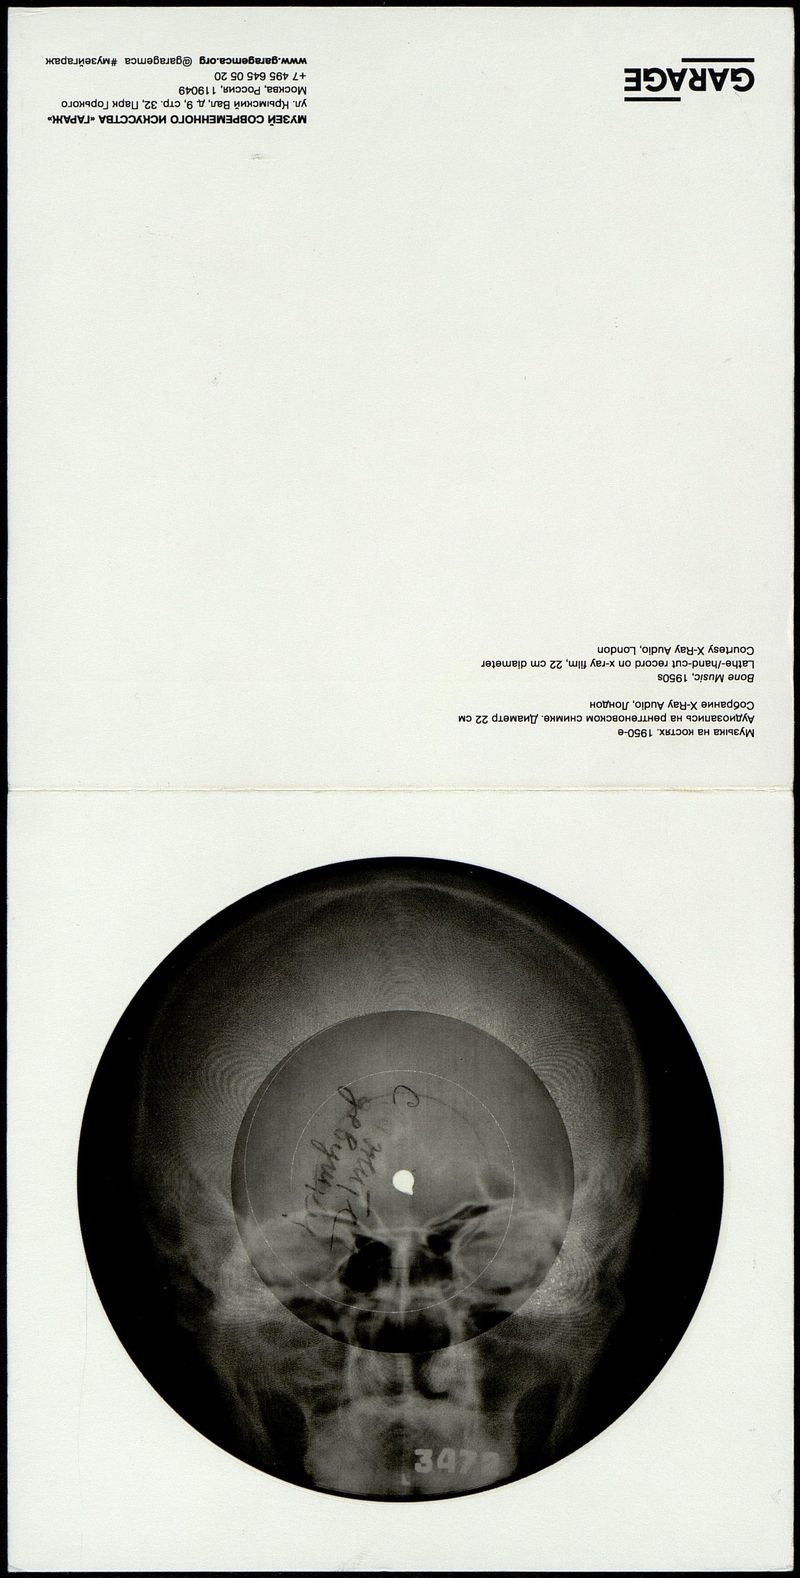 Lathe-/hand-cut record on x-ray film